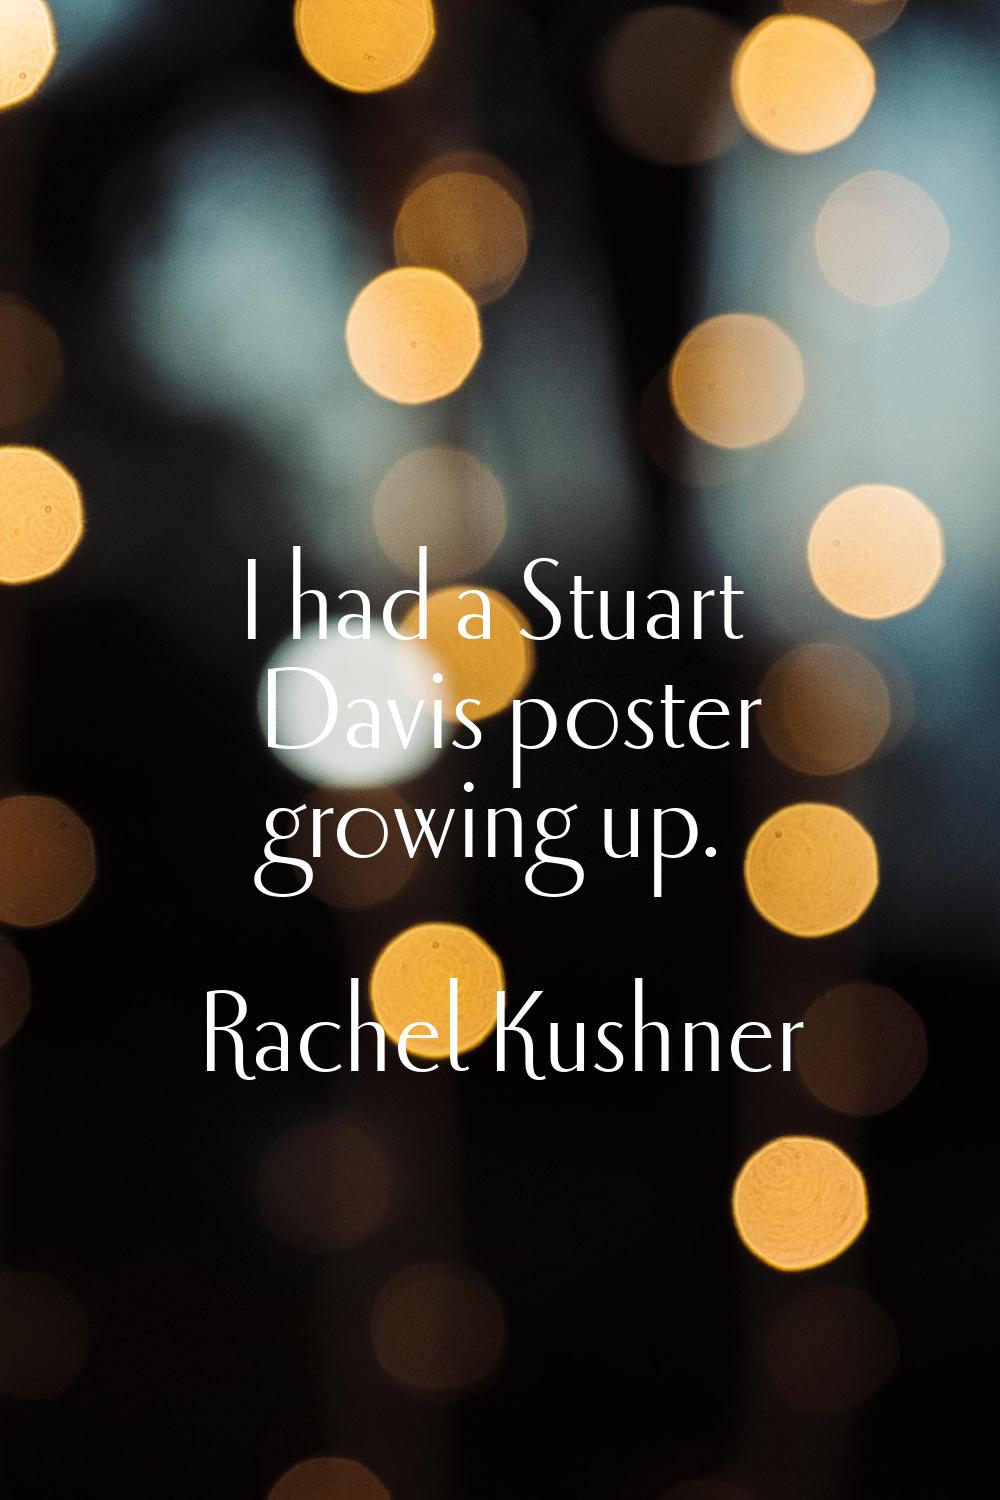 I had a Stuart Davis poster growing up.